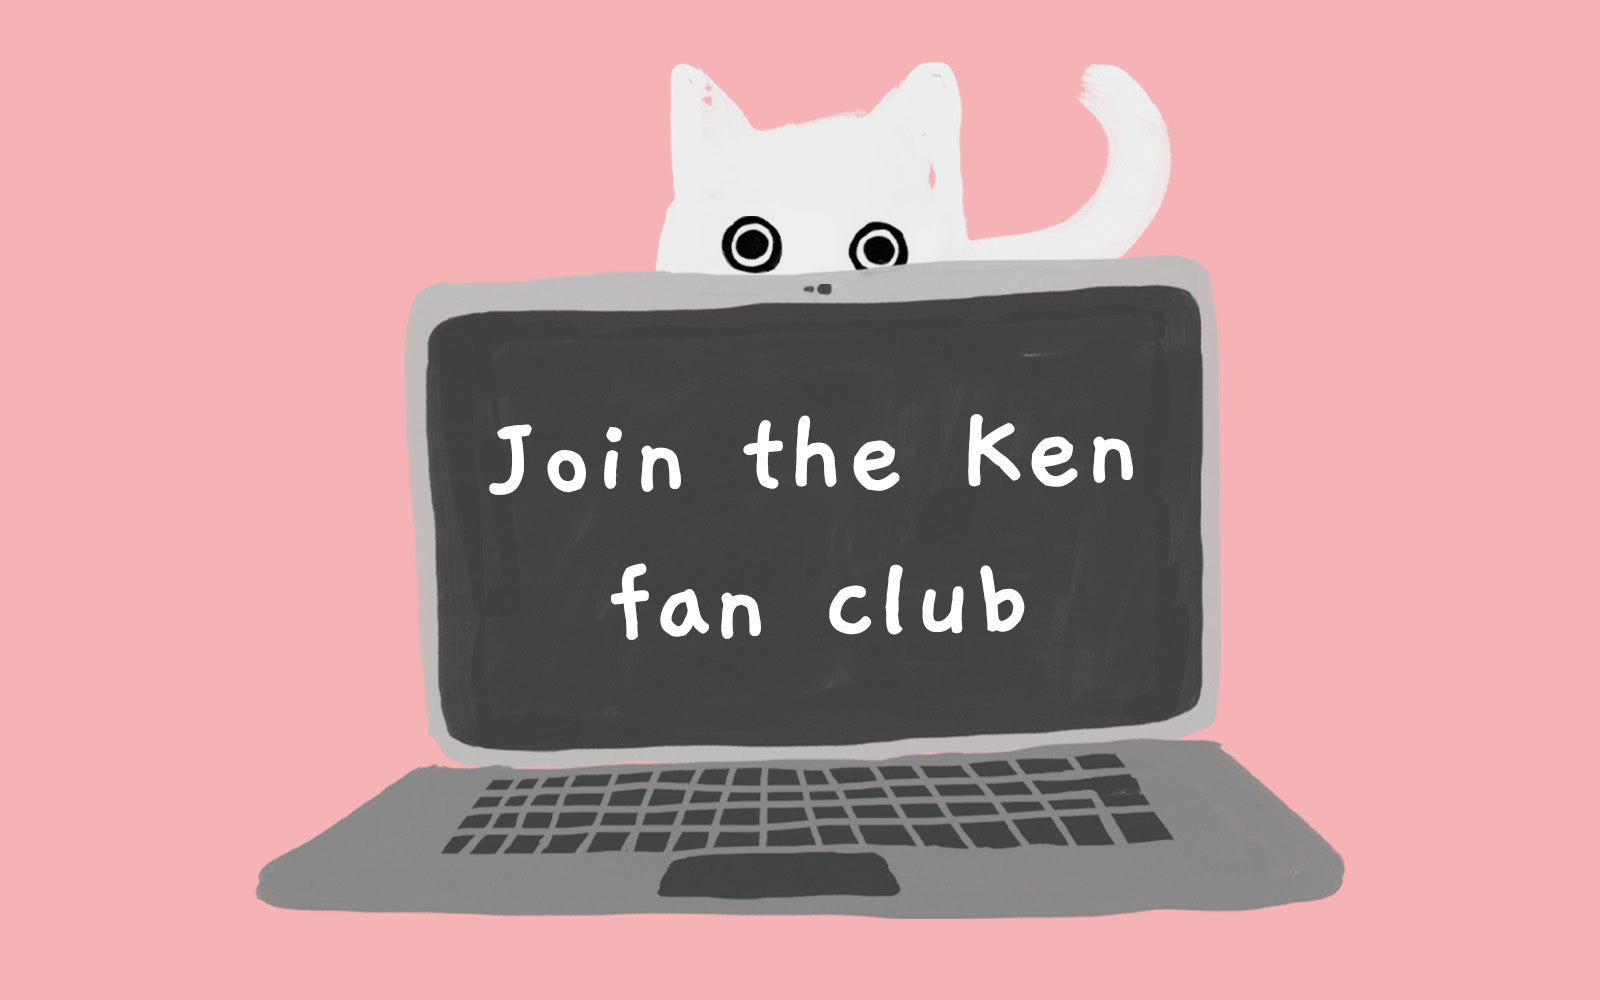 Ken the Cat peering behind laptop screen - join the Ken fan club on pink background